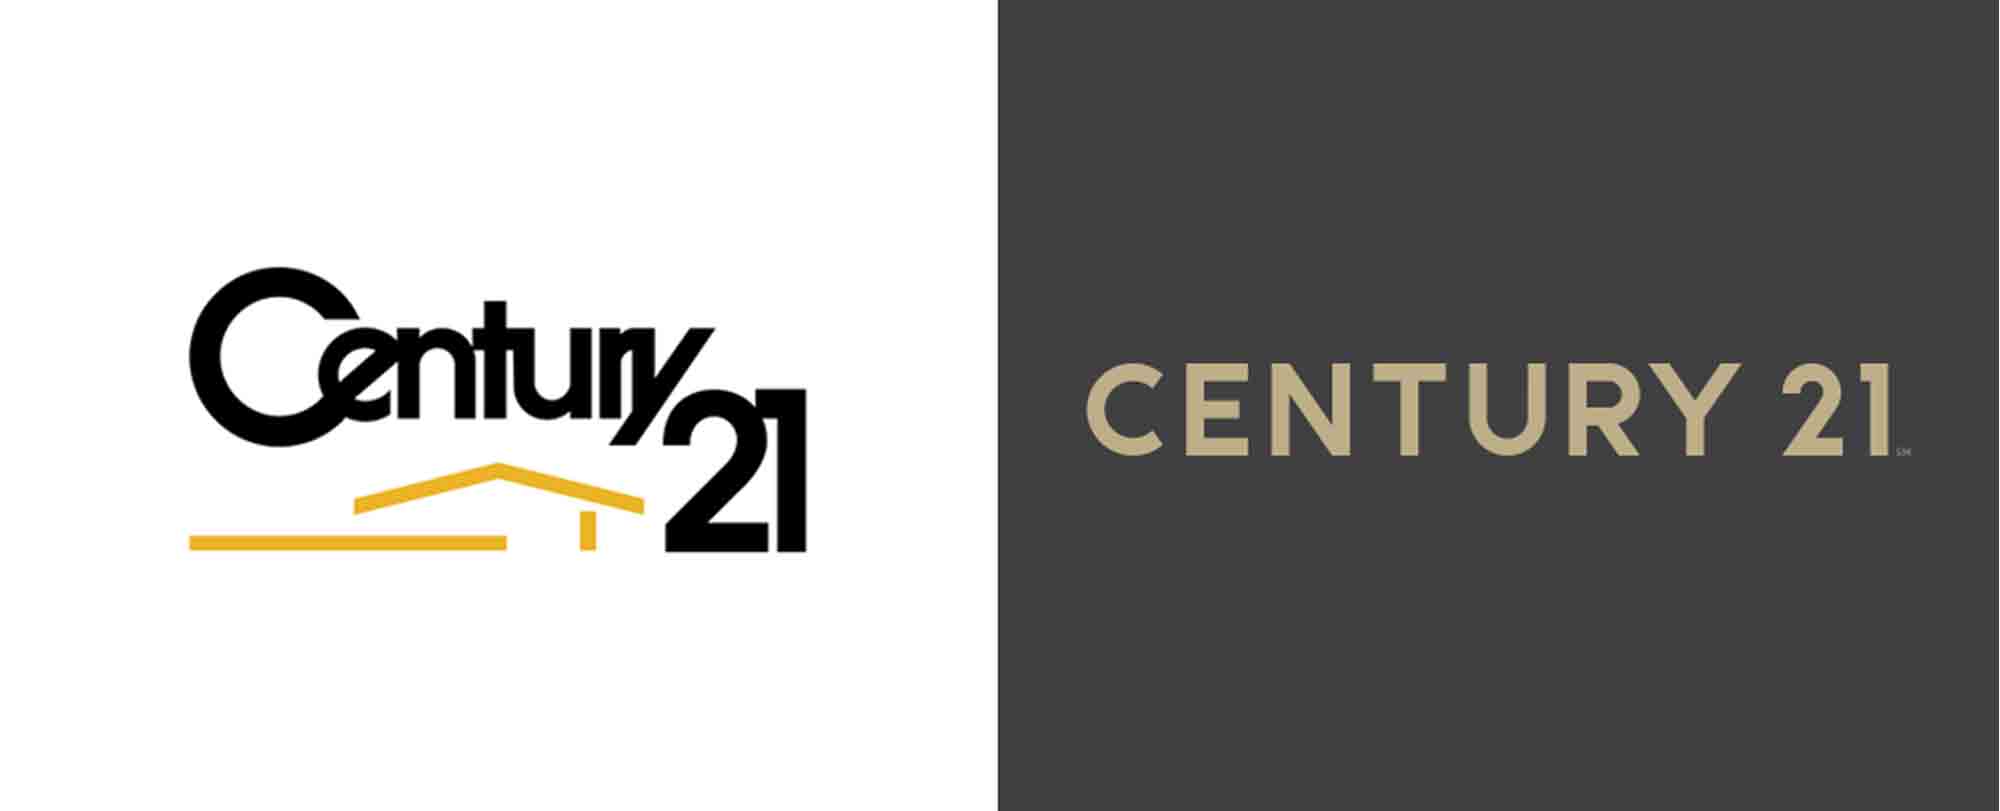 21 century недвижимость. Сентури 21. Сенчури 21 логотип. Century 21 картинки. 21 Век логотип.